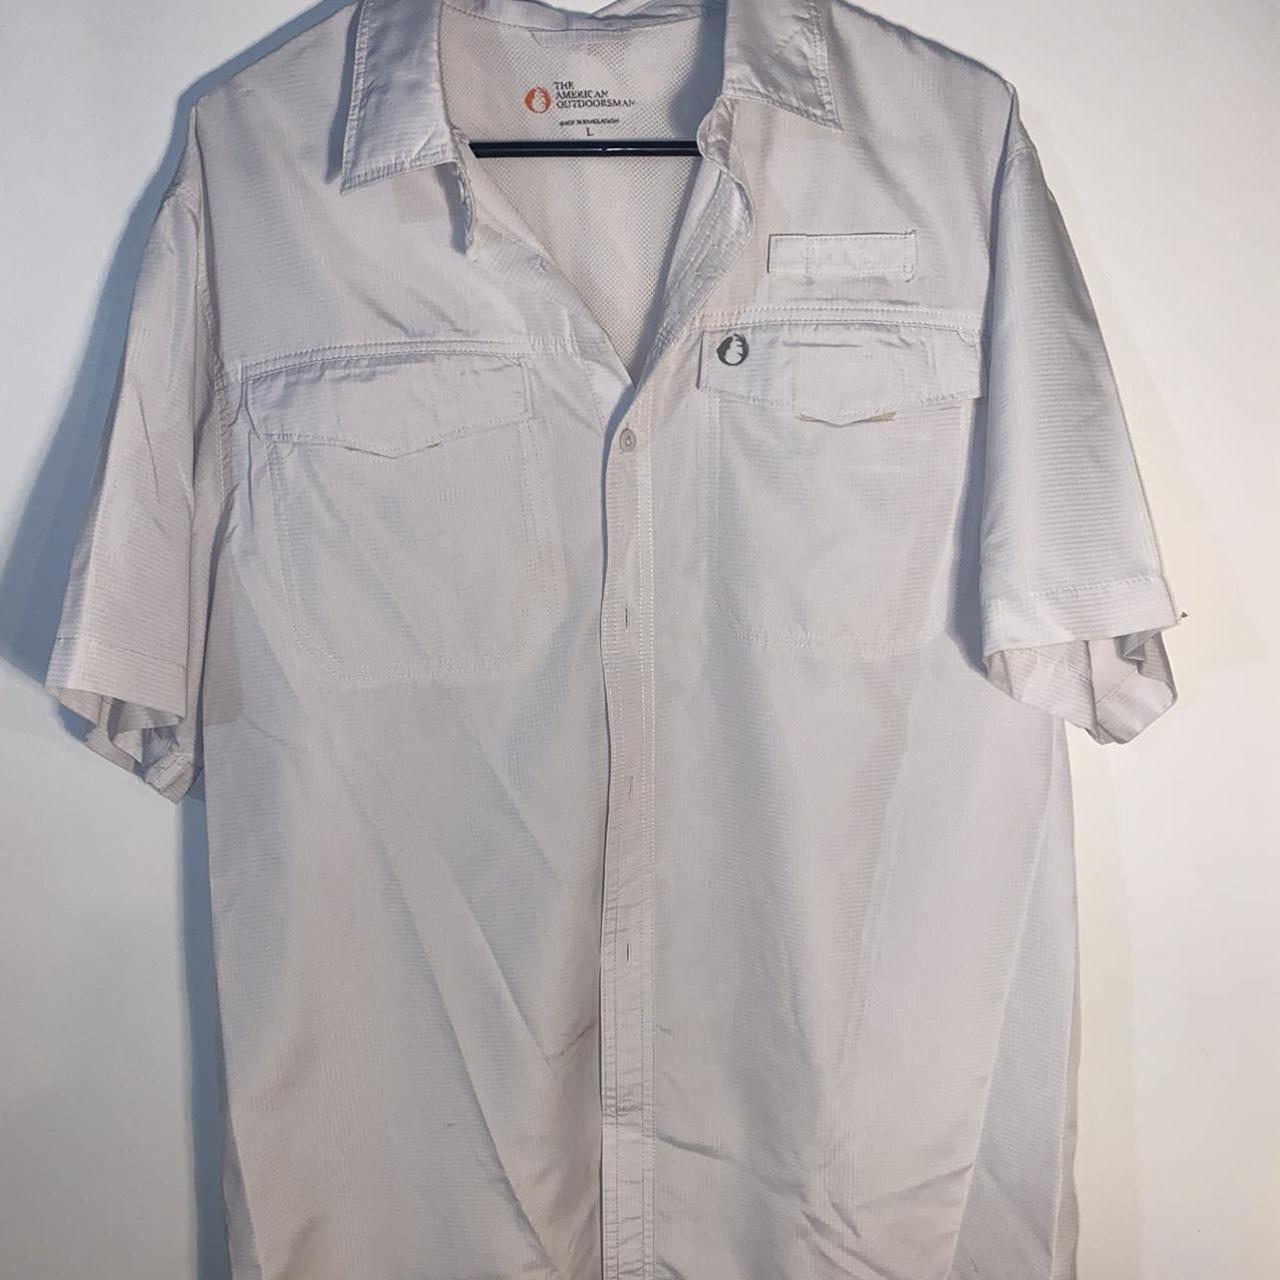 The American Outdoorsman Shirt White Vented Fishing - Depop